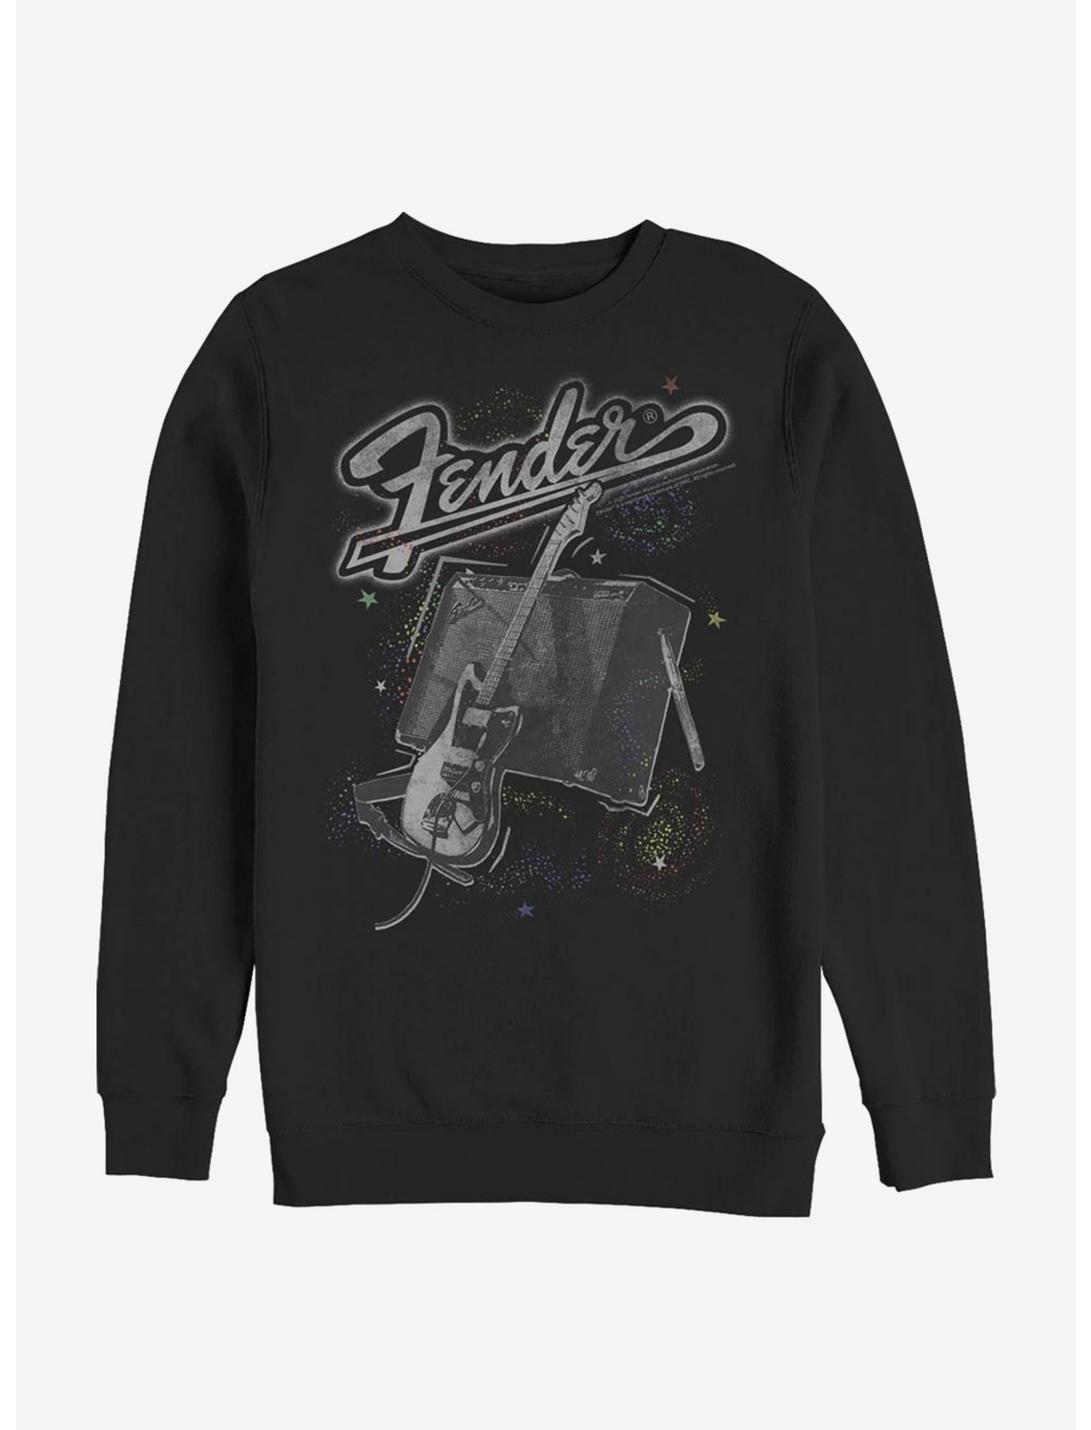 Fender Space Fender Crew Sweatshirt, BLACK, hi-res